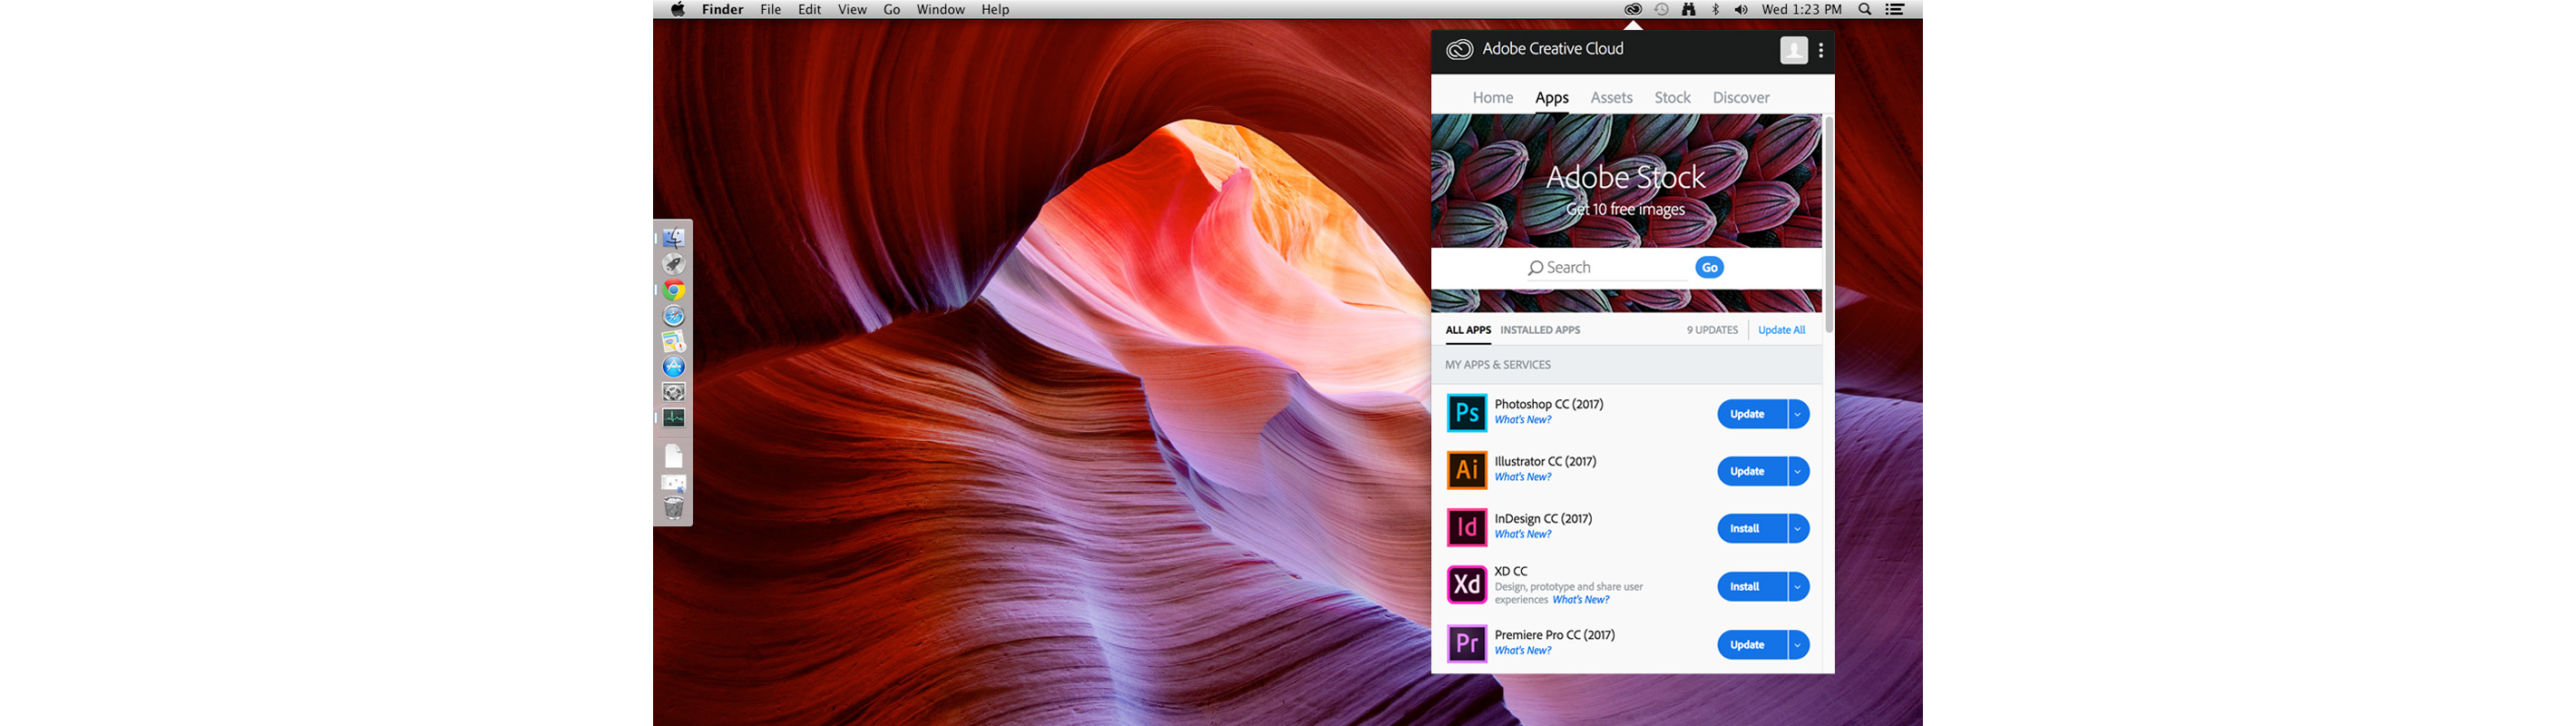 Adobe creative suite software for mac windows 10